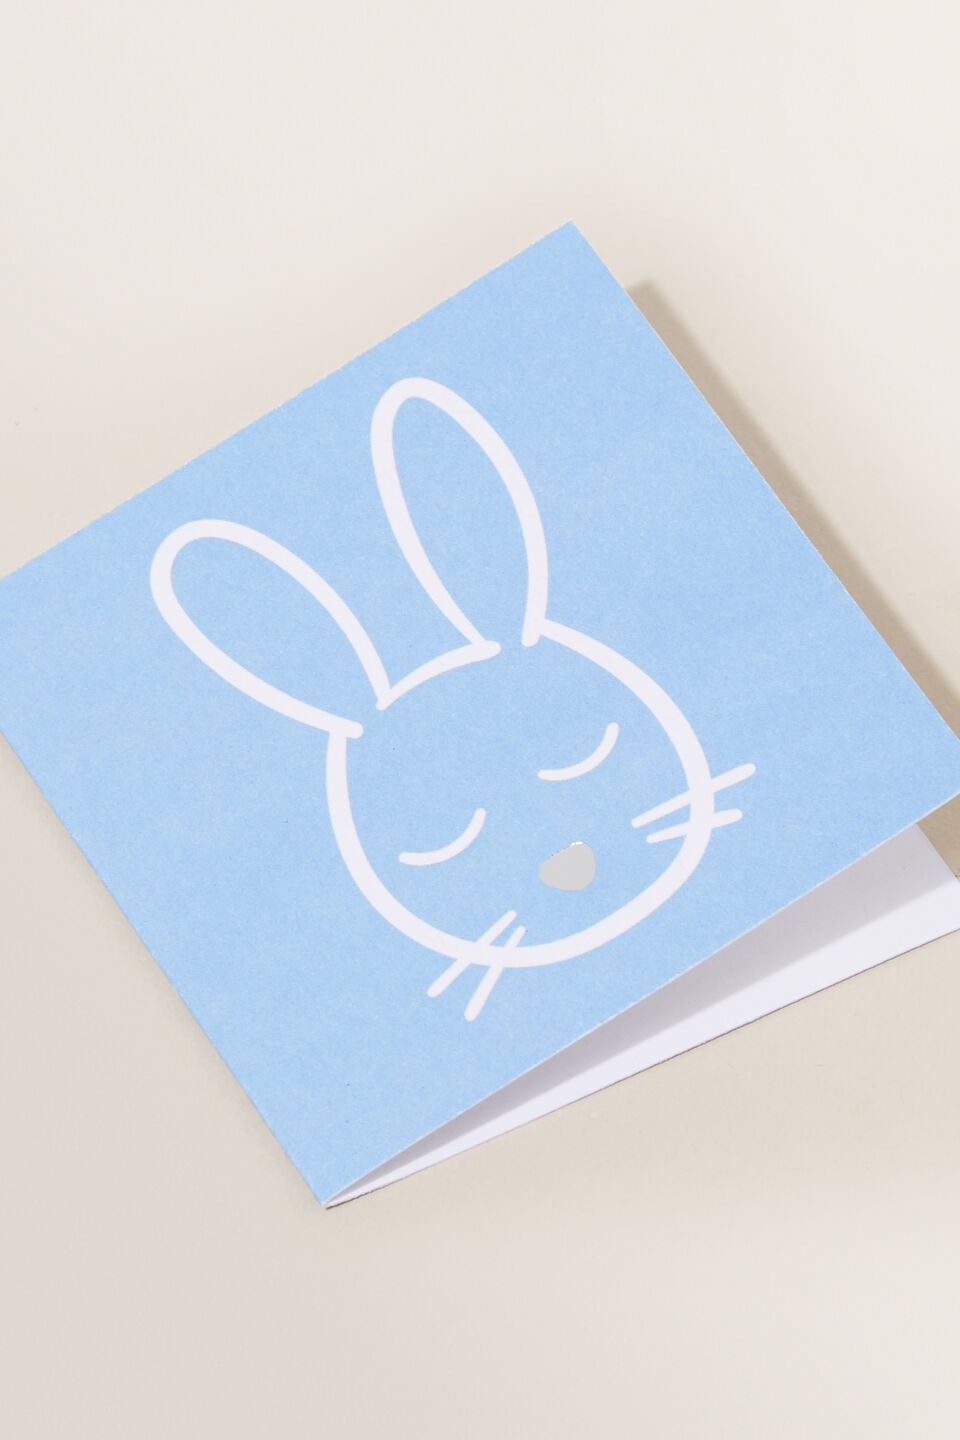 Small Blue Bunny Face Card  Multi